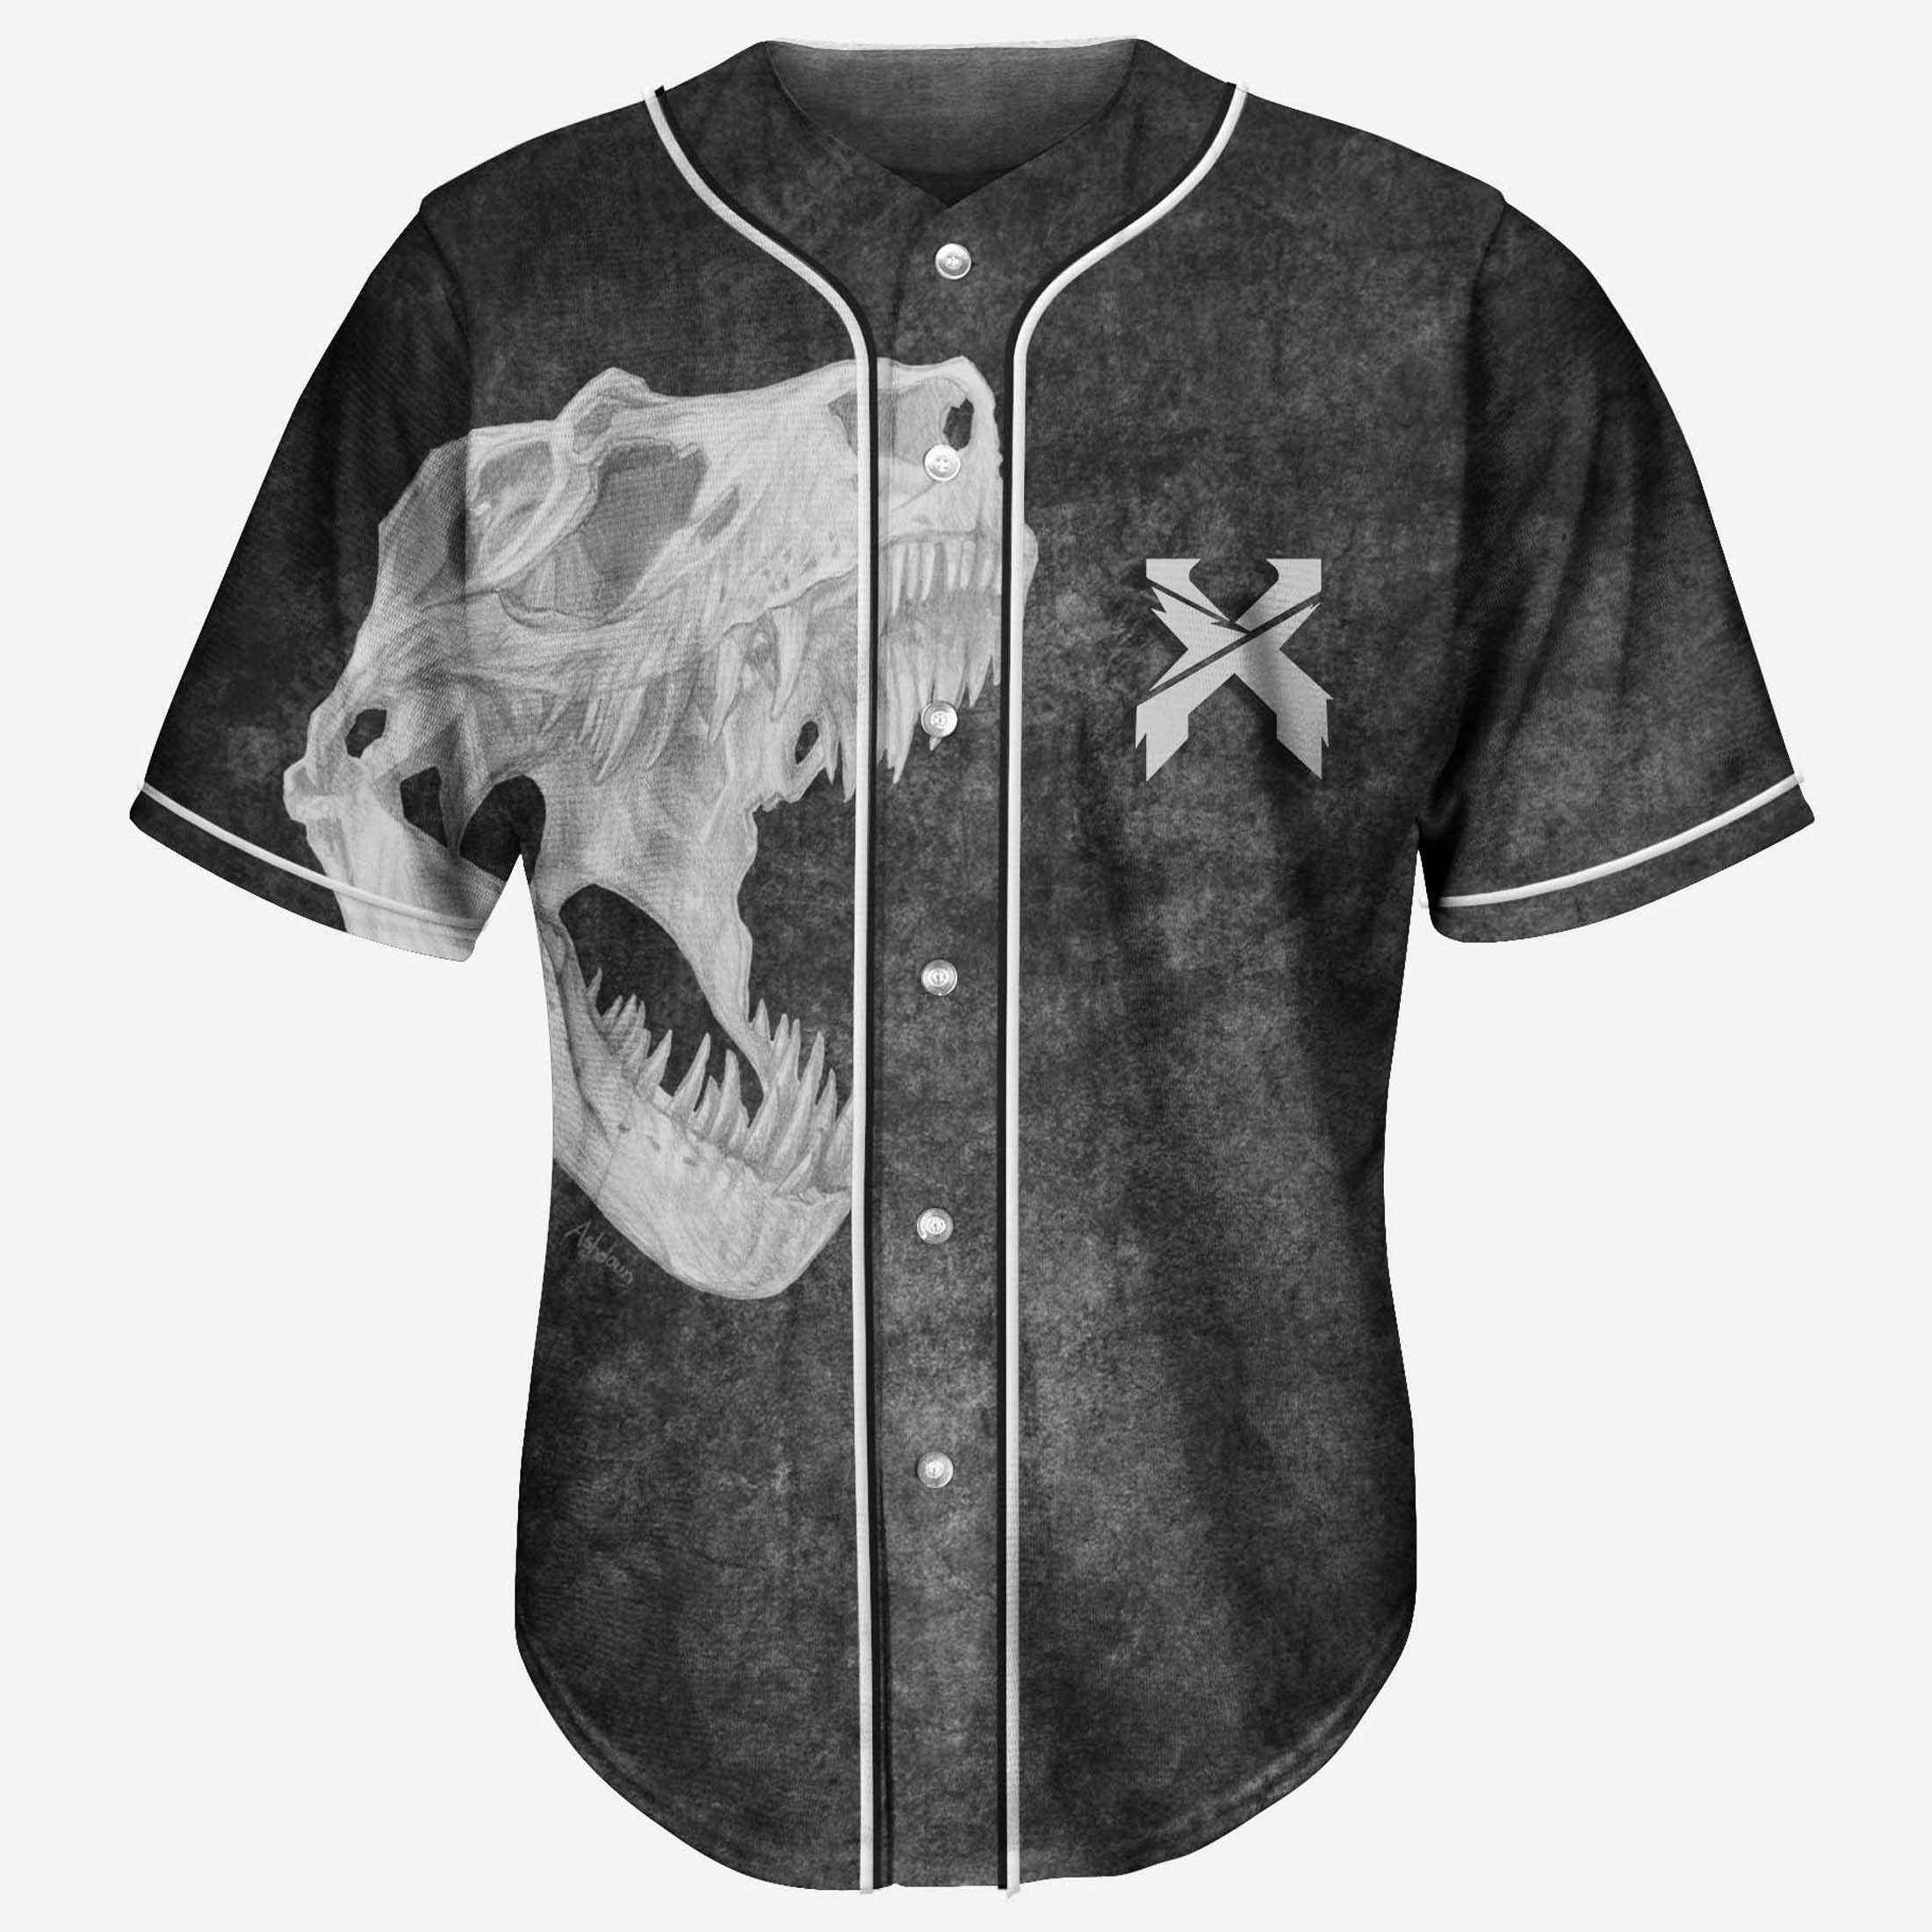 Grunge excision t-rex headbanger baseball jersey for EDM festivals